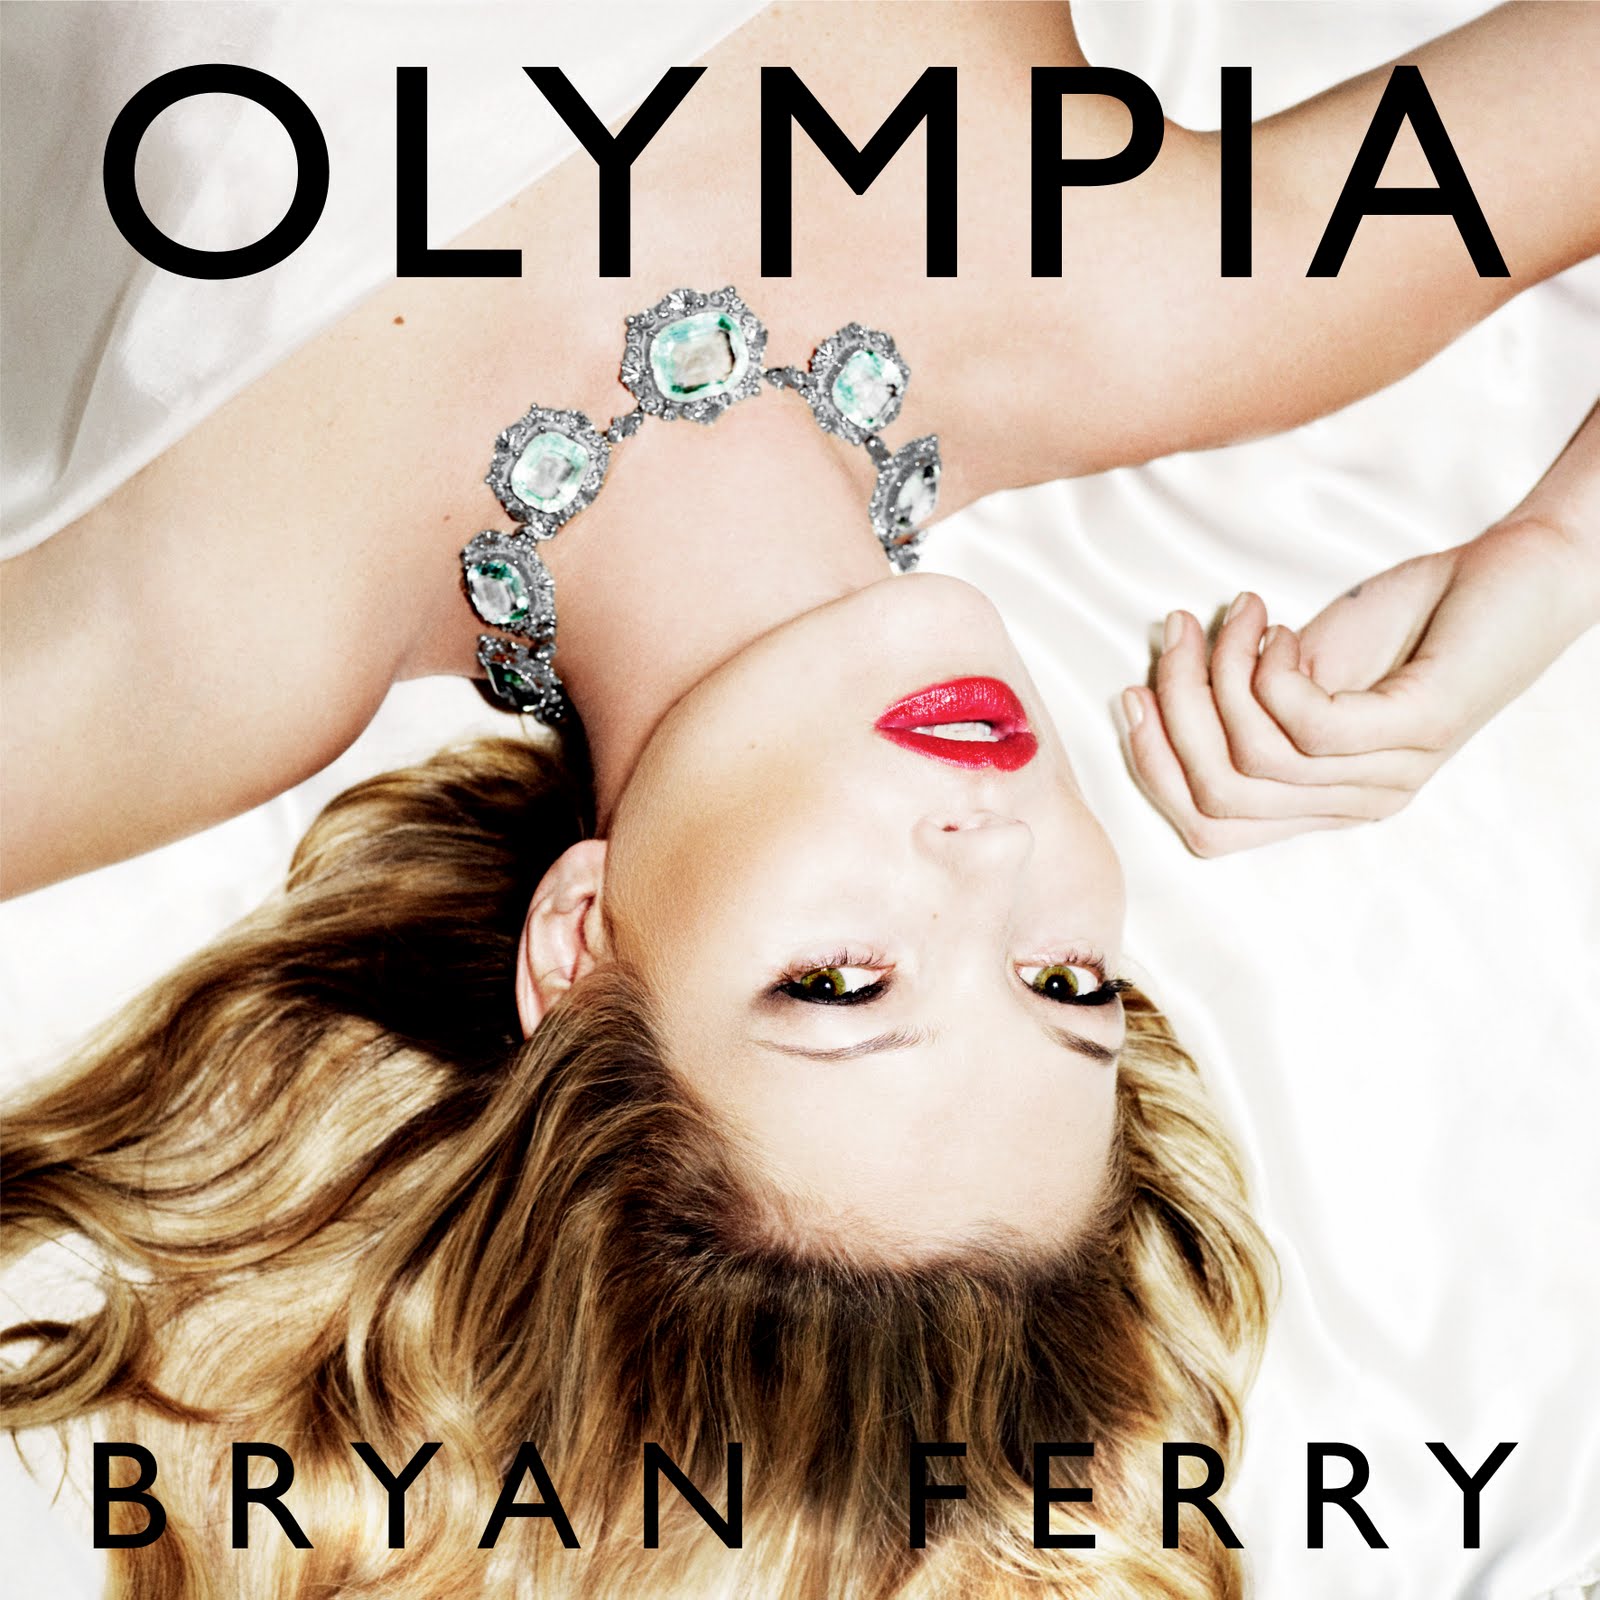  Stamattina... Oggi pomeriggio... Stasera... Stanotte... (parte 10) - Pagina 13 Bryan+Ferry+Olympia